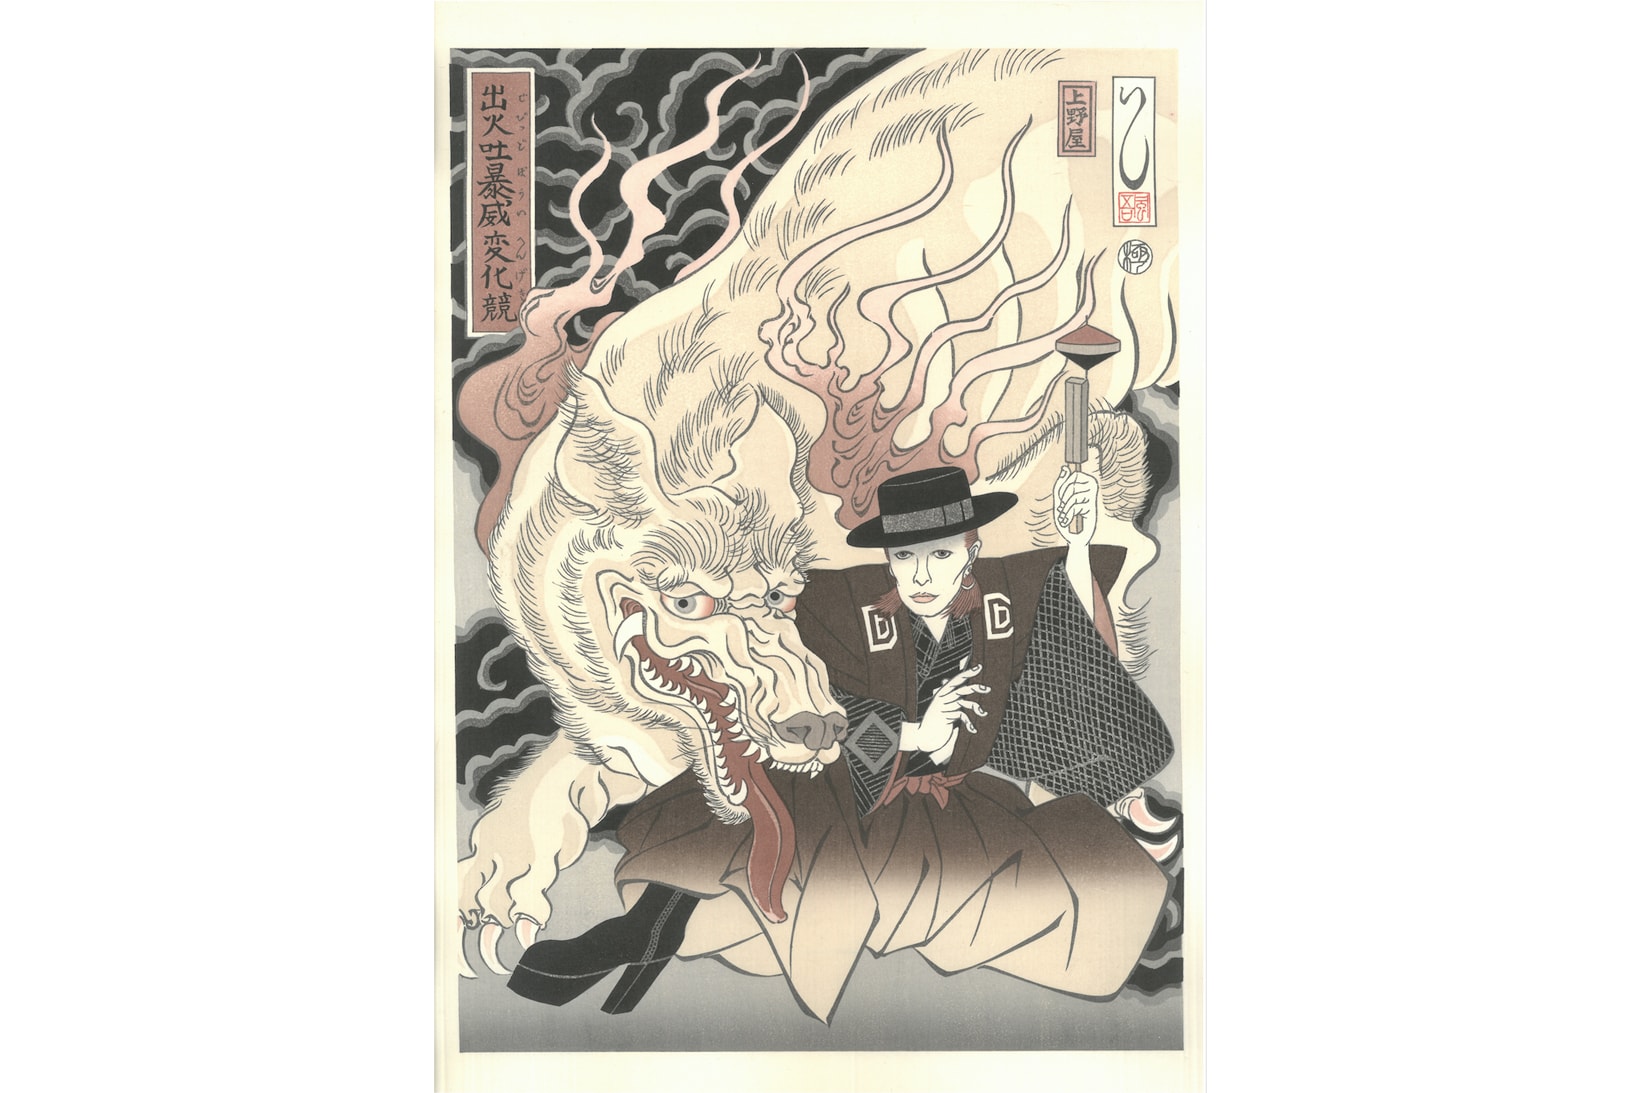 david bowie ukiyo-e woodblock prints bookmarc tokyo japan exhibition artworks